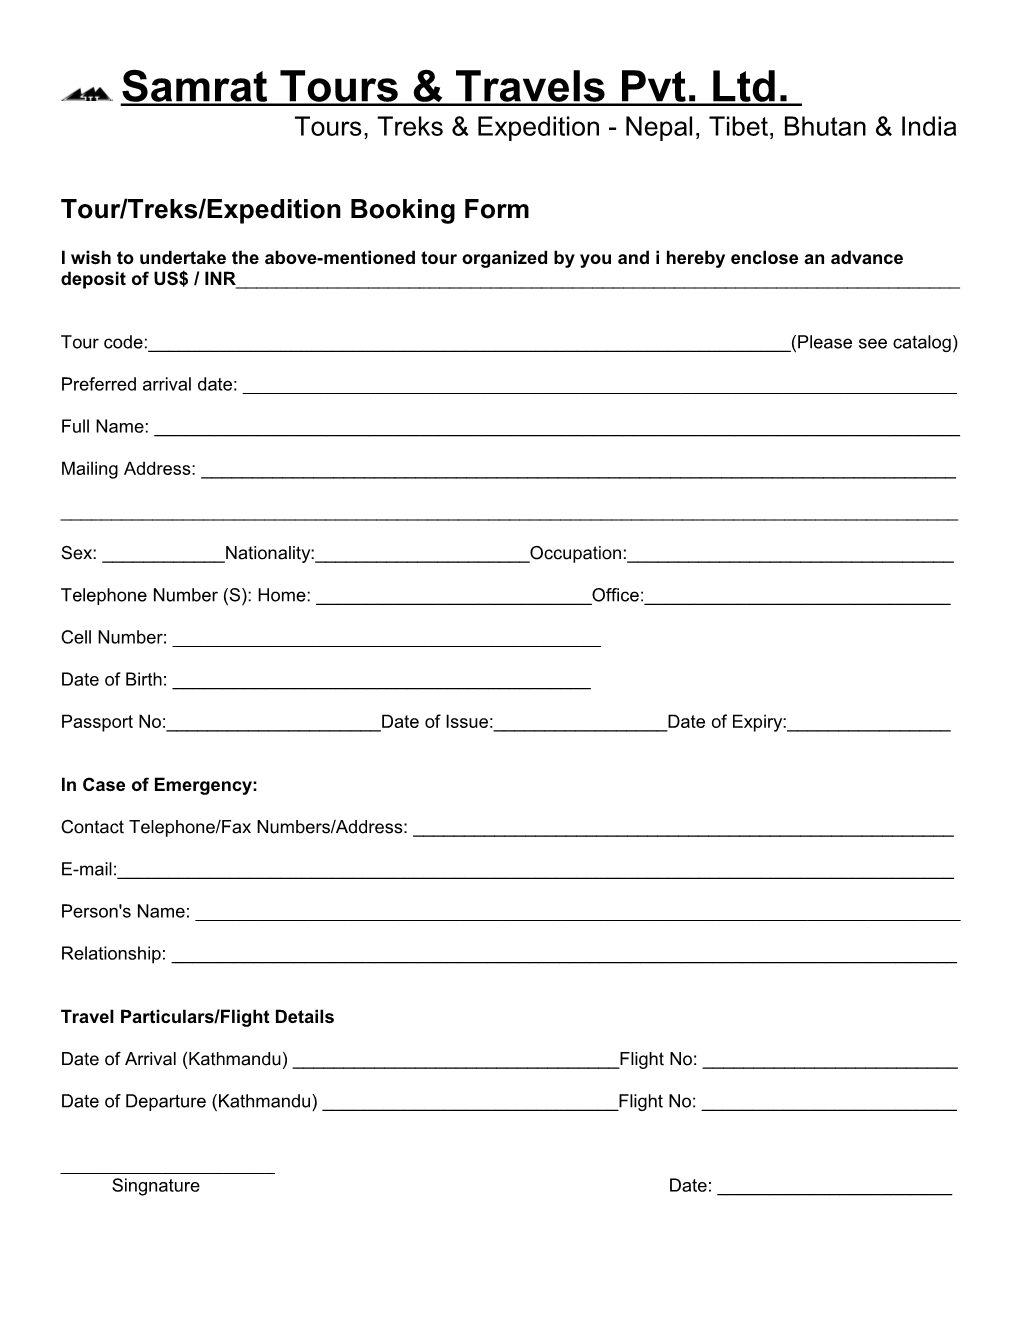 Tour/Treks/Expedition Booking Form